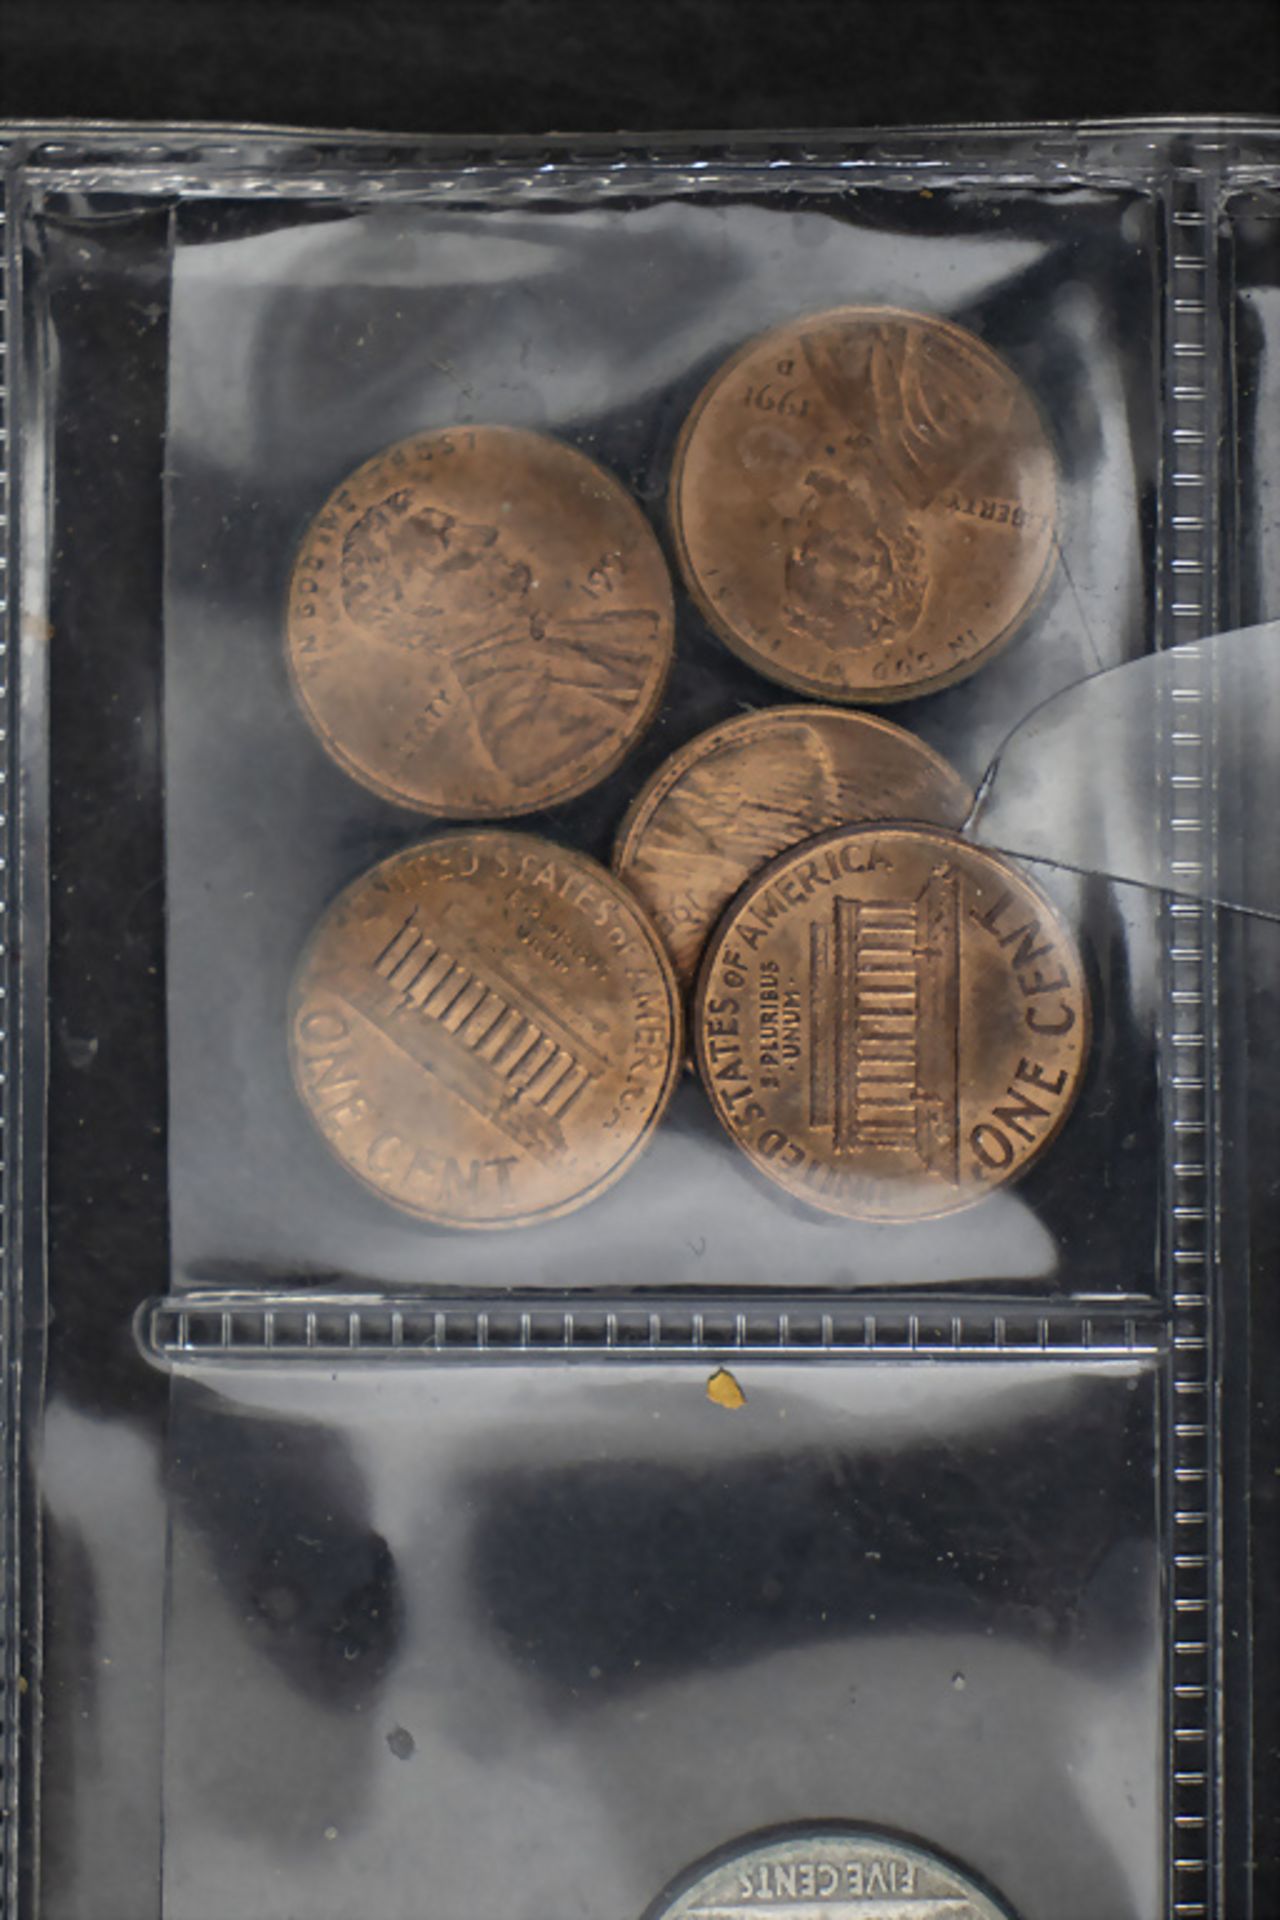 Sammlung Münzen 'USA' / A collection of US coins - Image 8 of 9